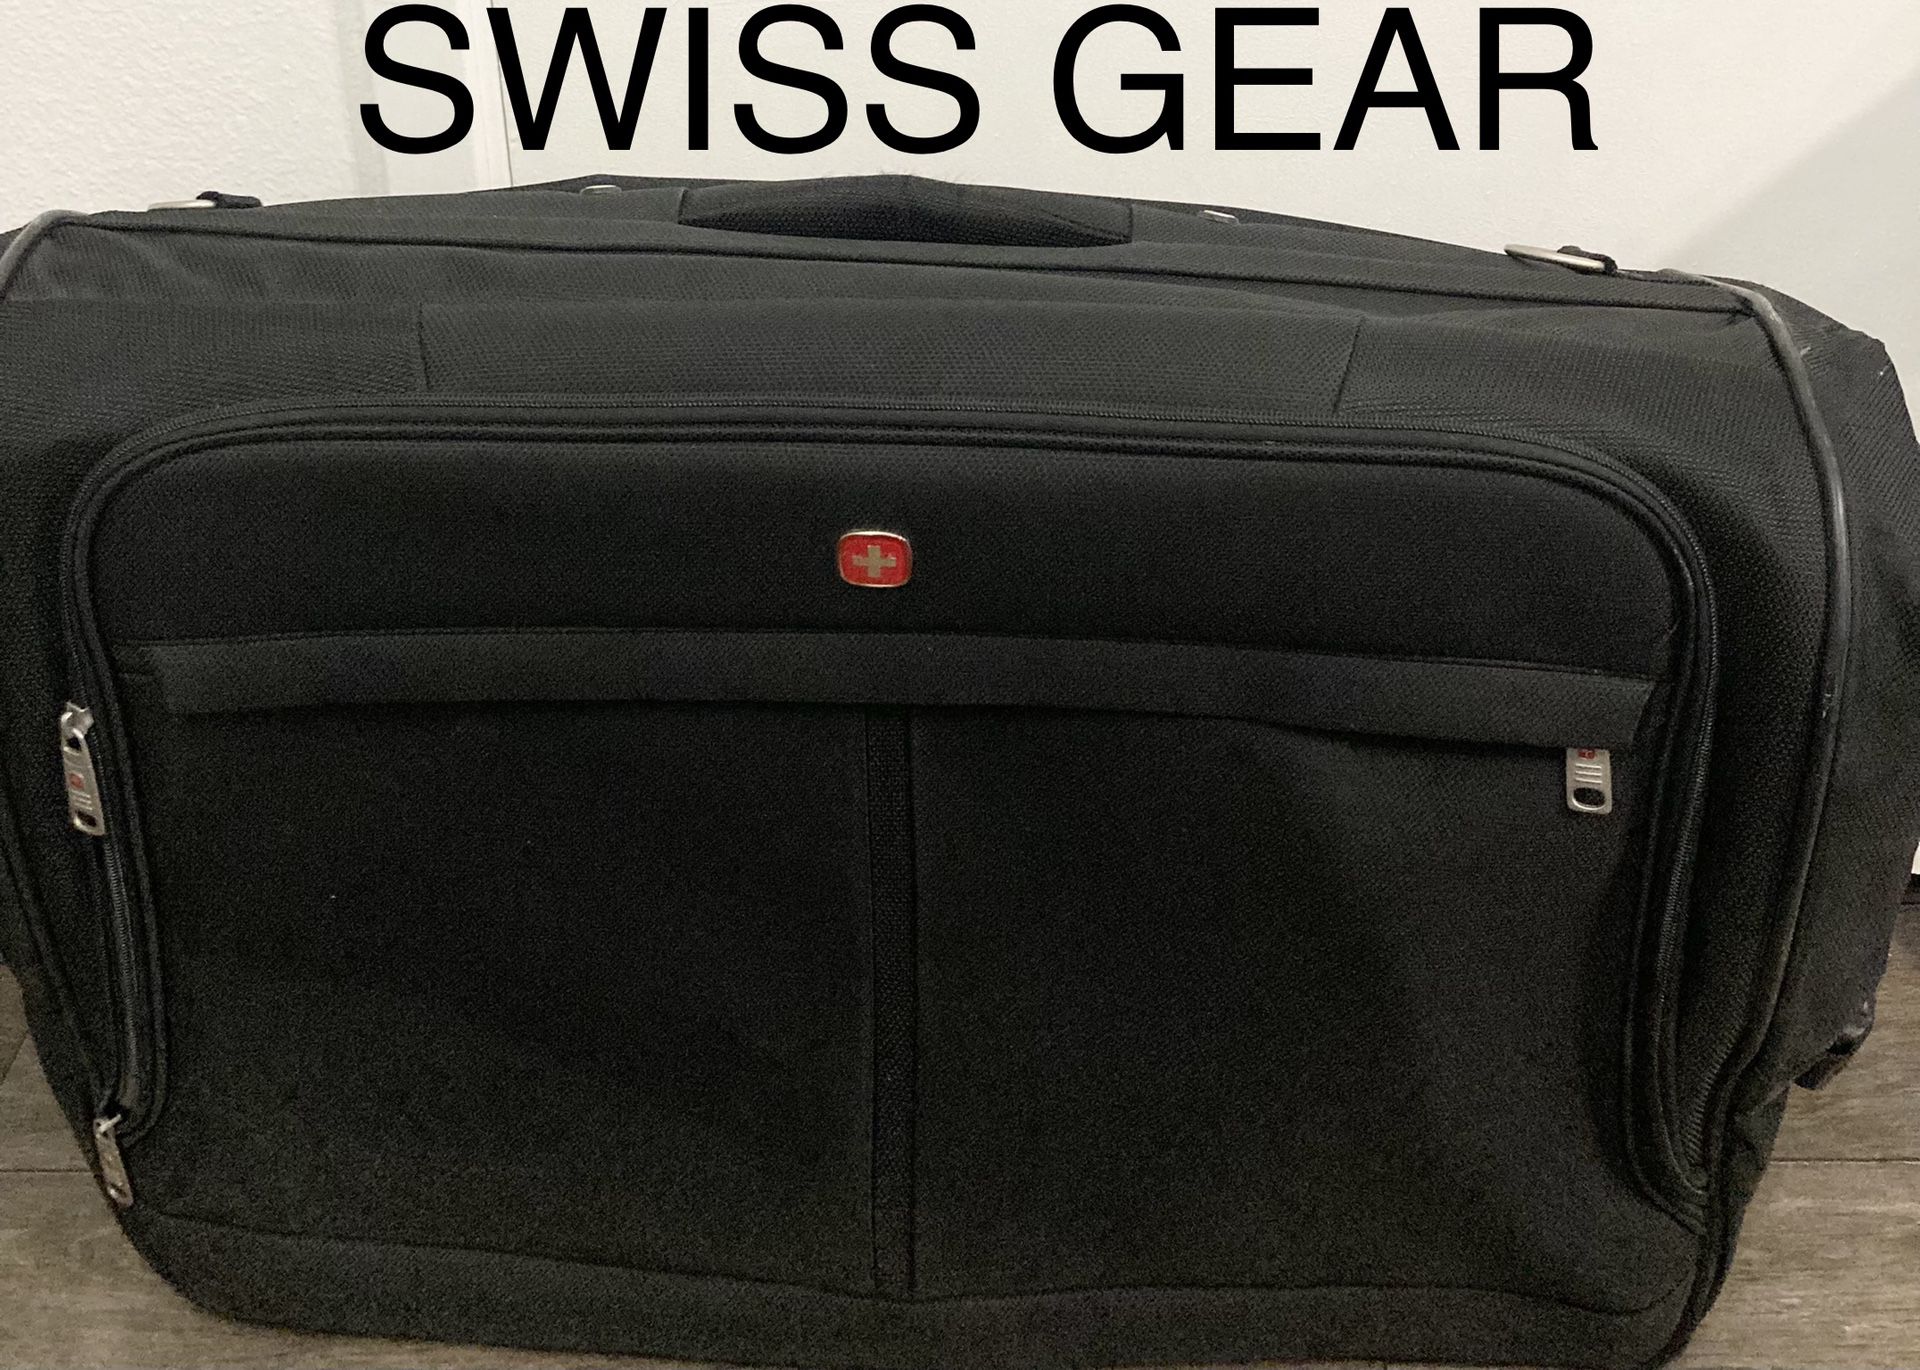 Swiss gear Travel bag